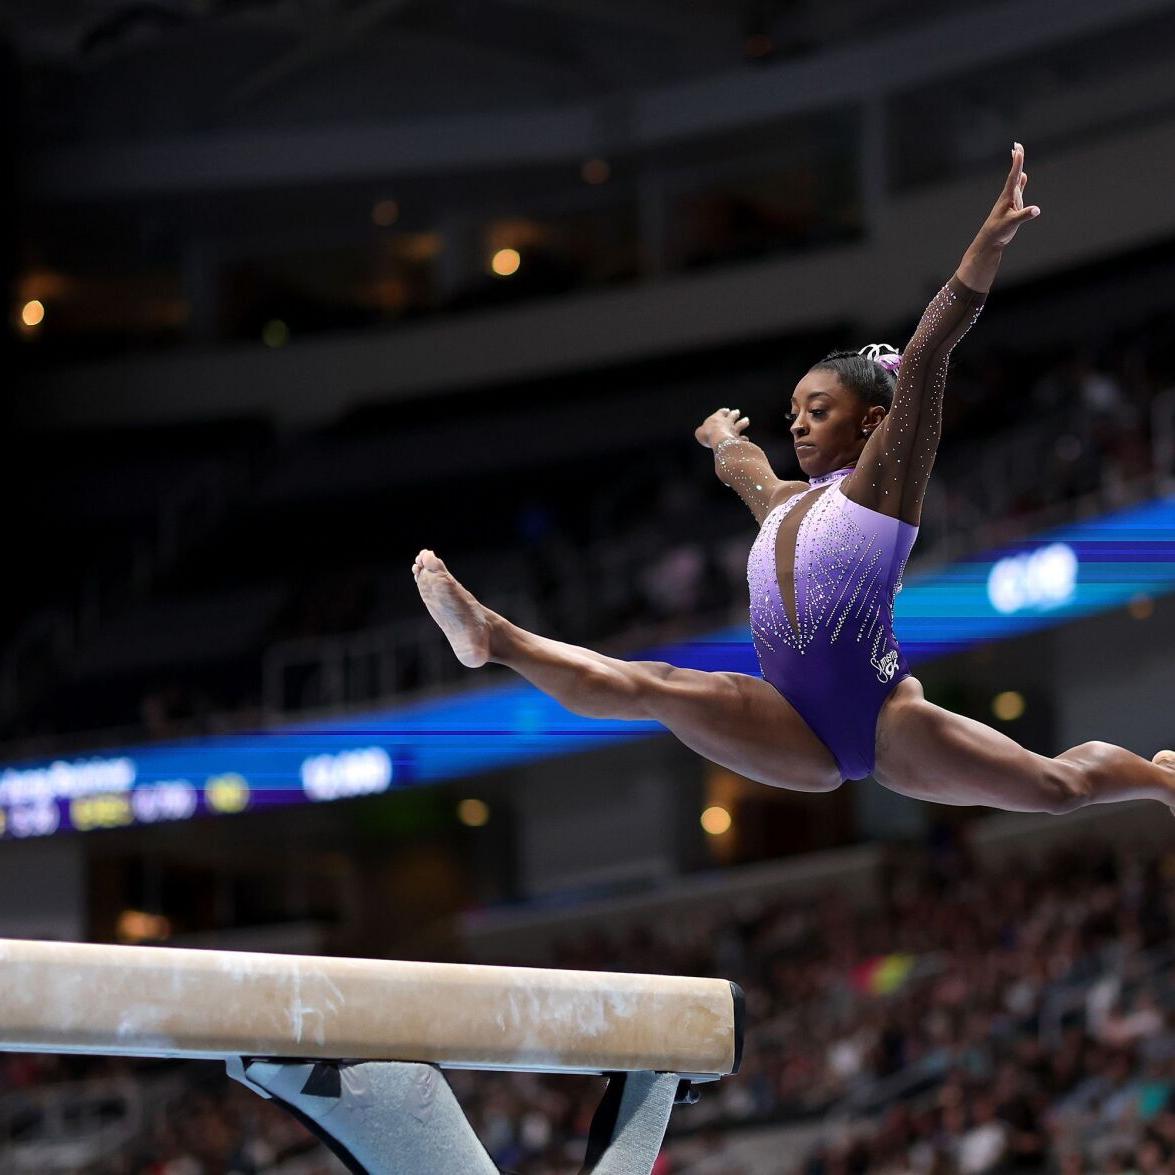 Simone Biles wins record eighth title at US Gymnastics